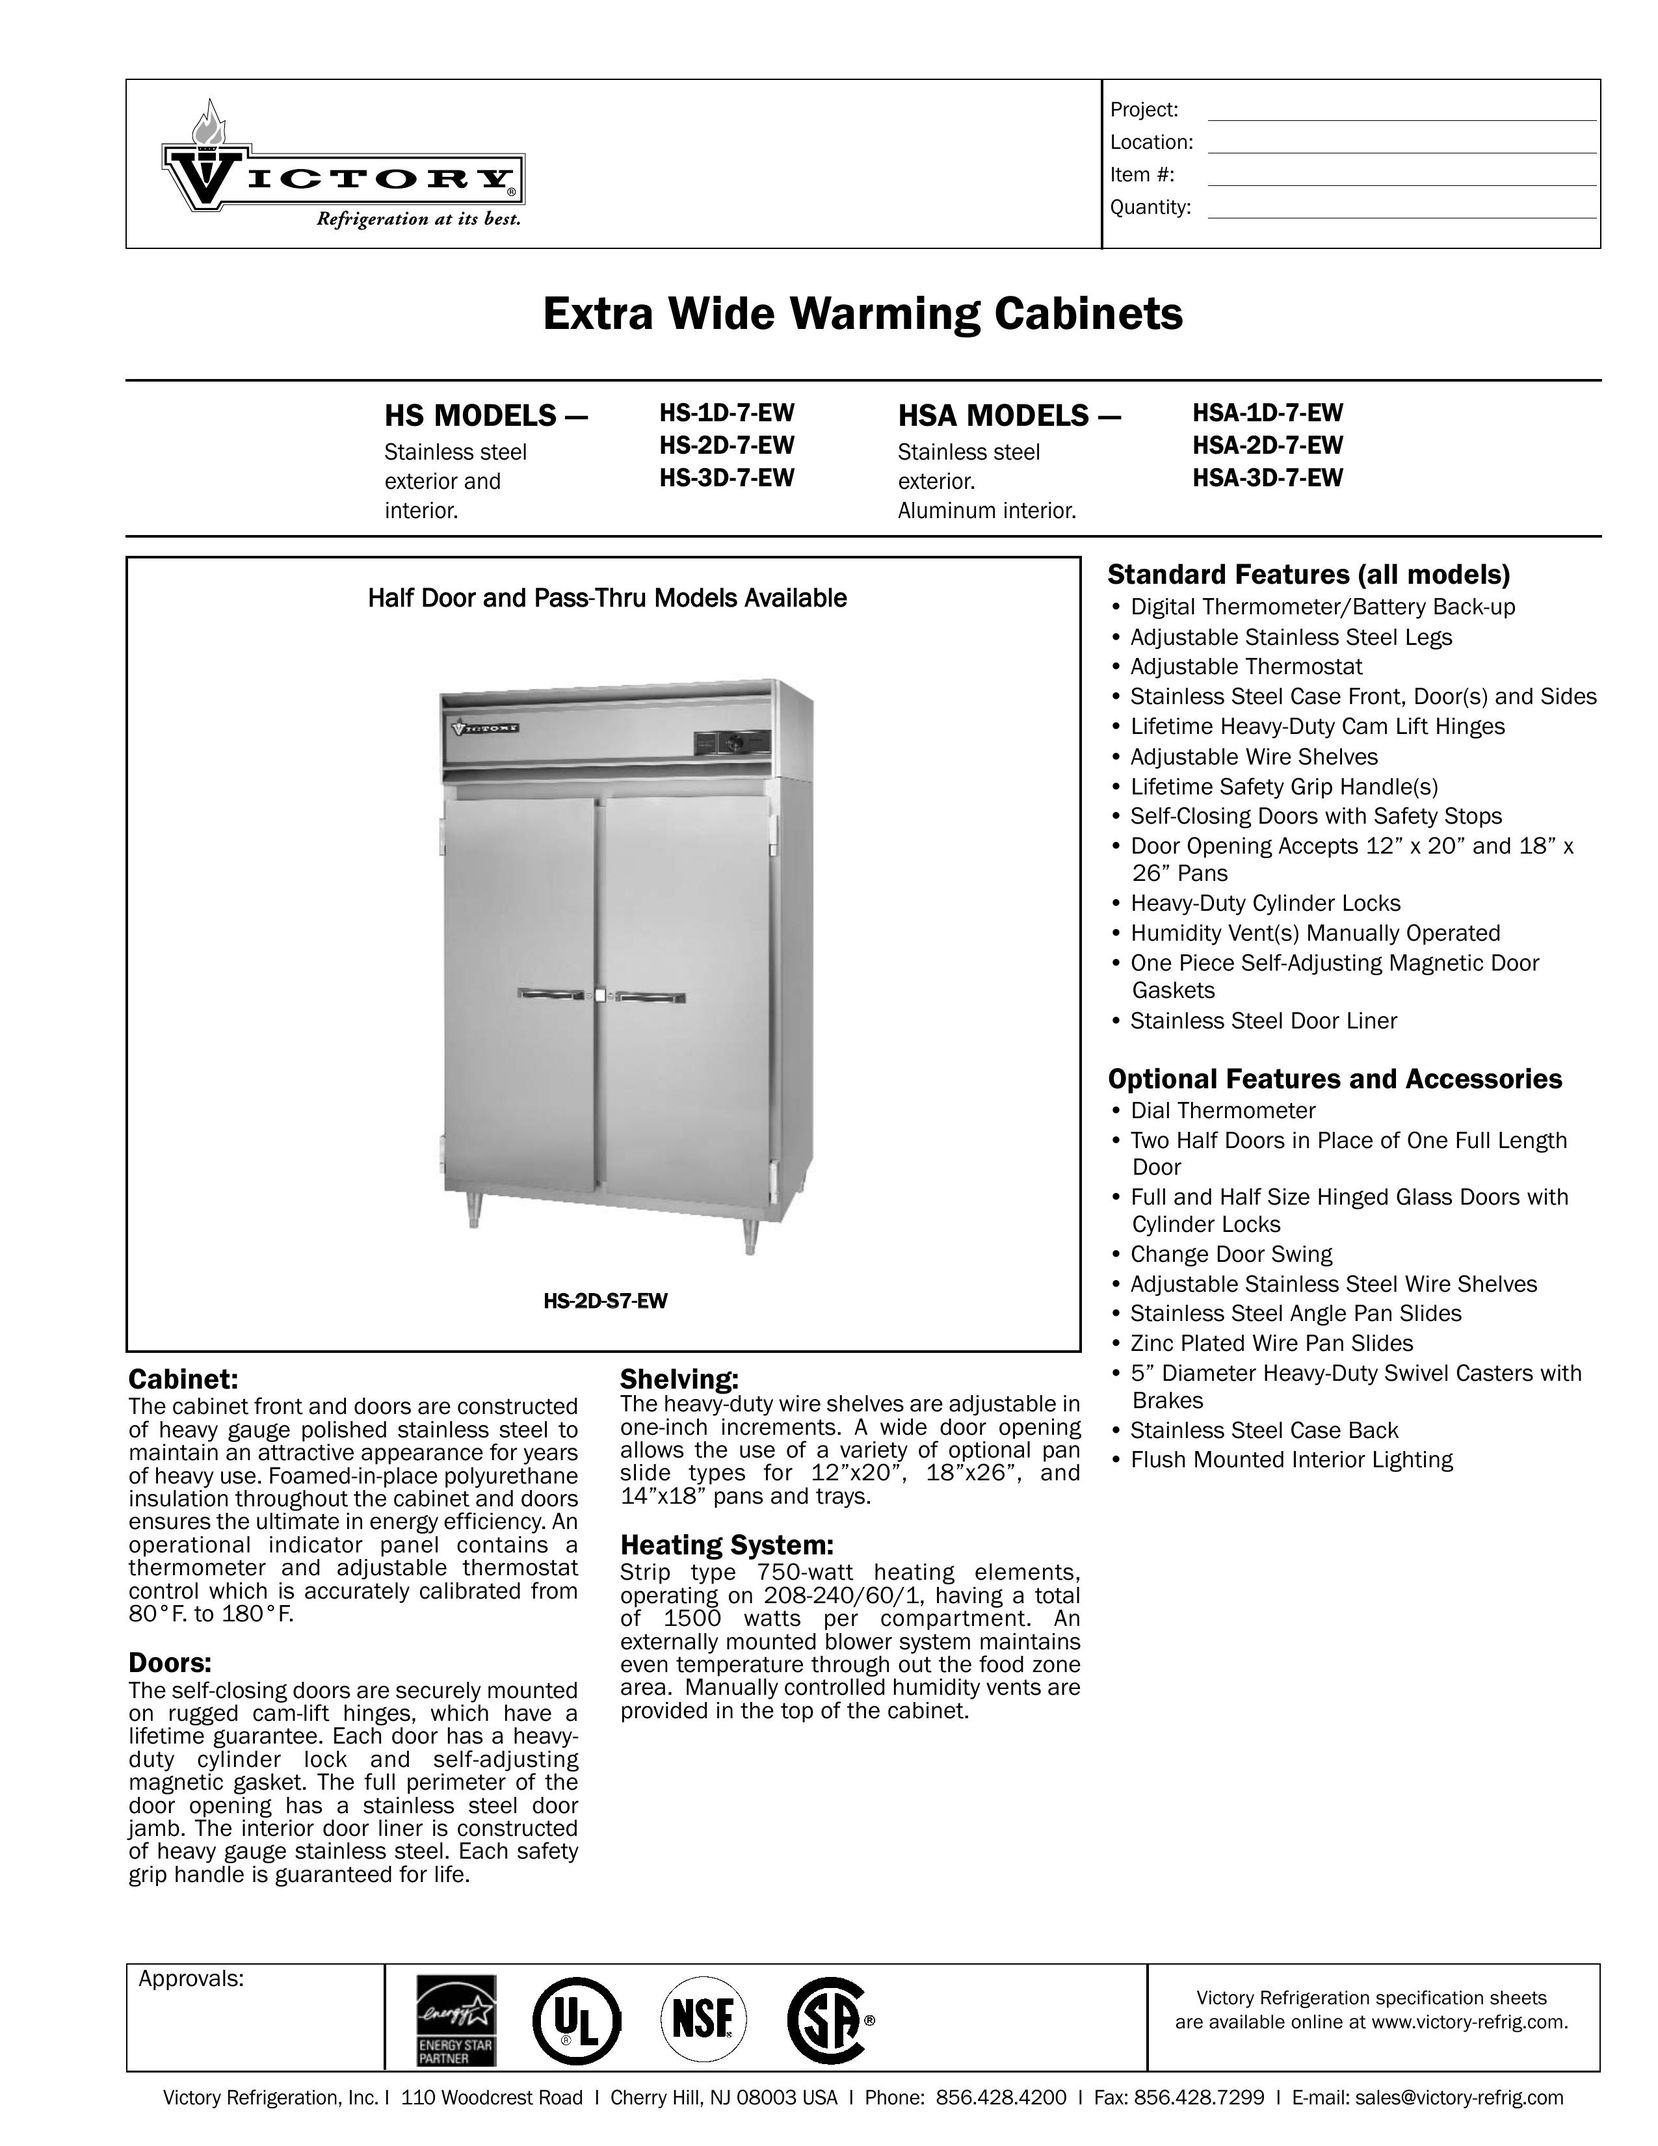 Victory Refrigeration HSA-3D-7-EW Food Warmer User Manual